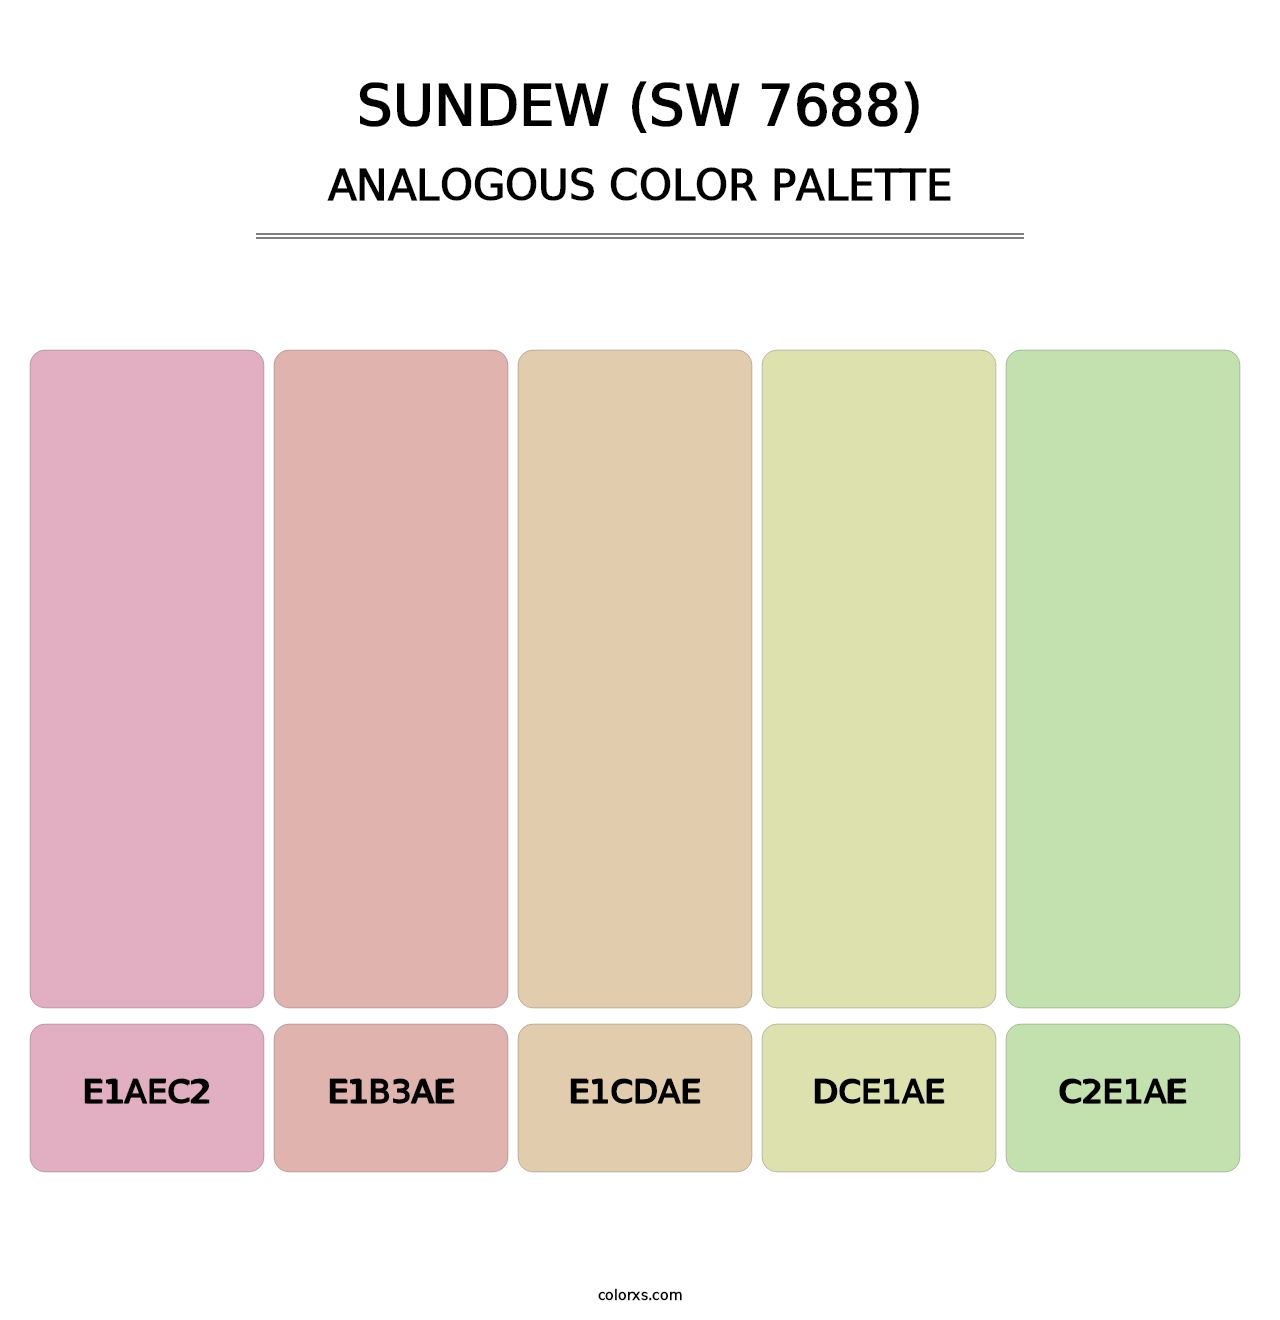 Sundew (SW 7688) - Analogous Color Palette